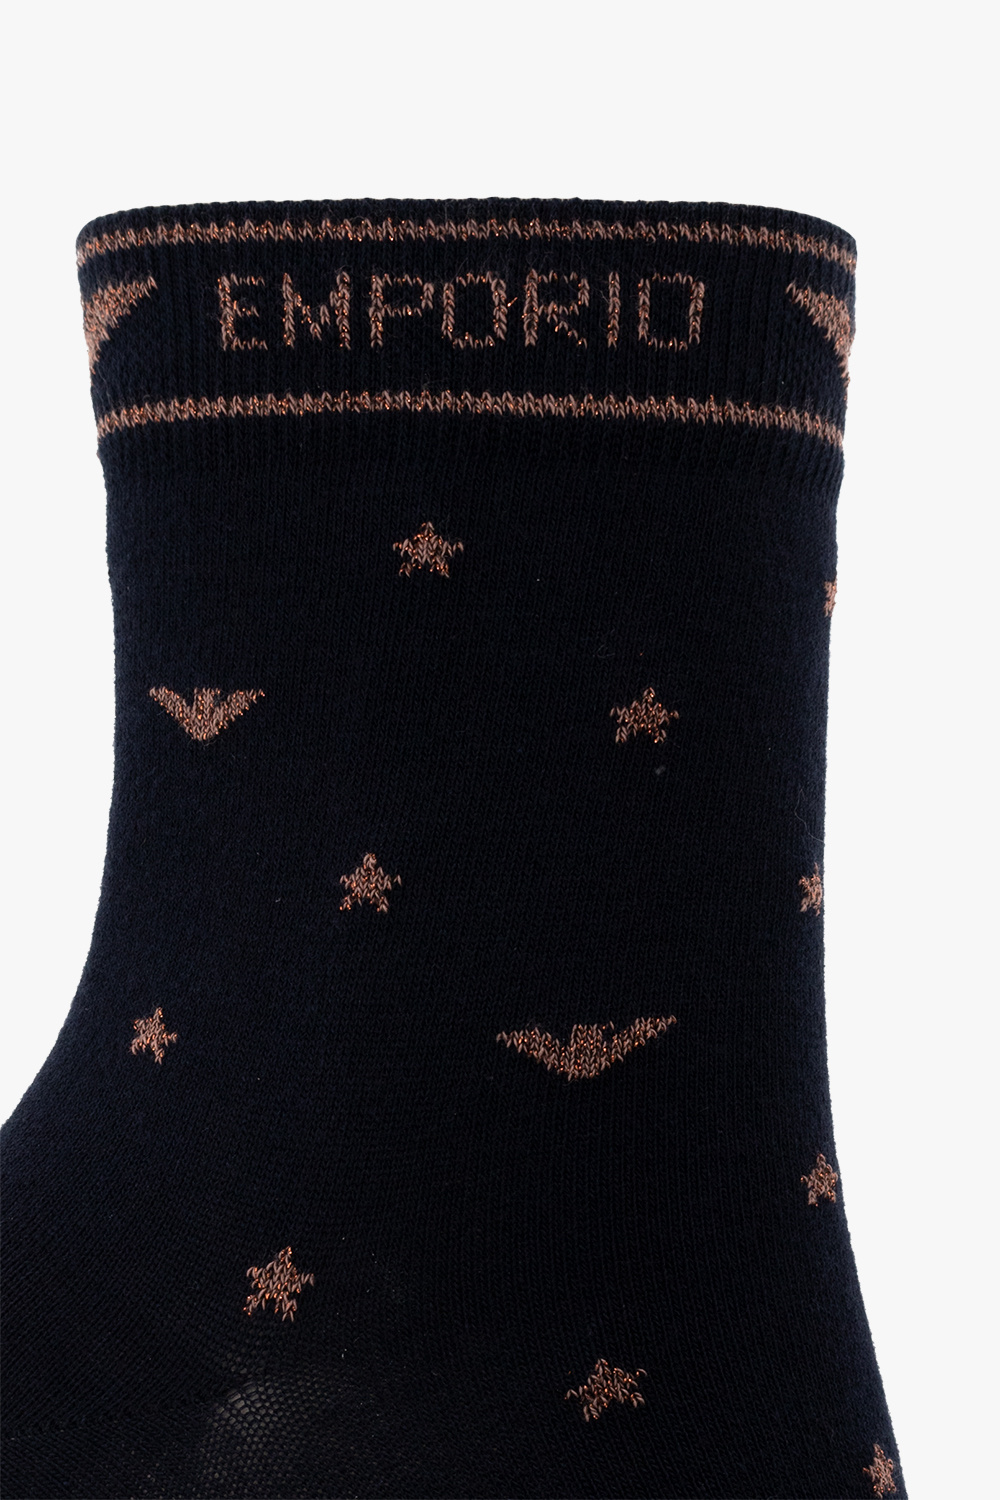 Emporio Armani Branded socks two-pack